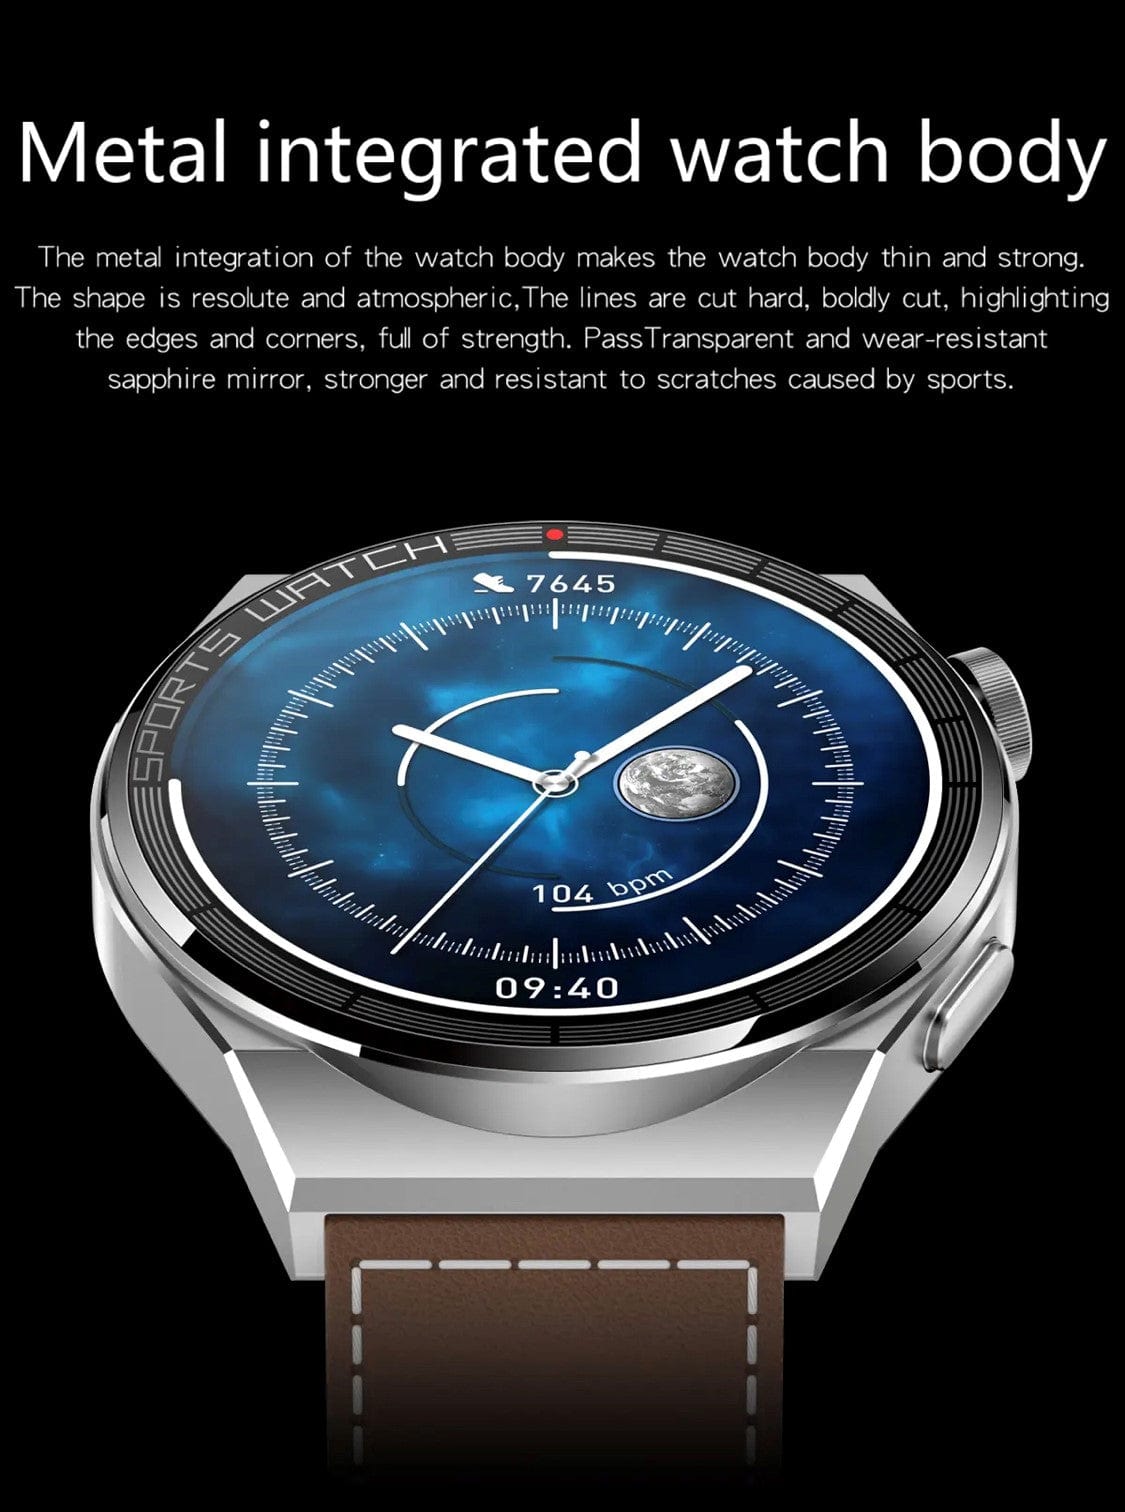 Smart Watch South Africa Smart Watch Black Smartoby Latest 1,39 Free Extra  Leather strap-  IP 68 Waterproof